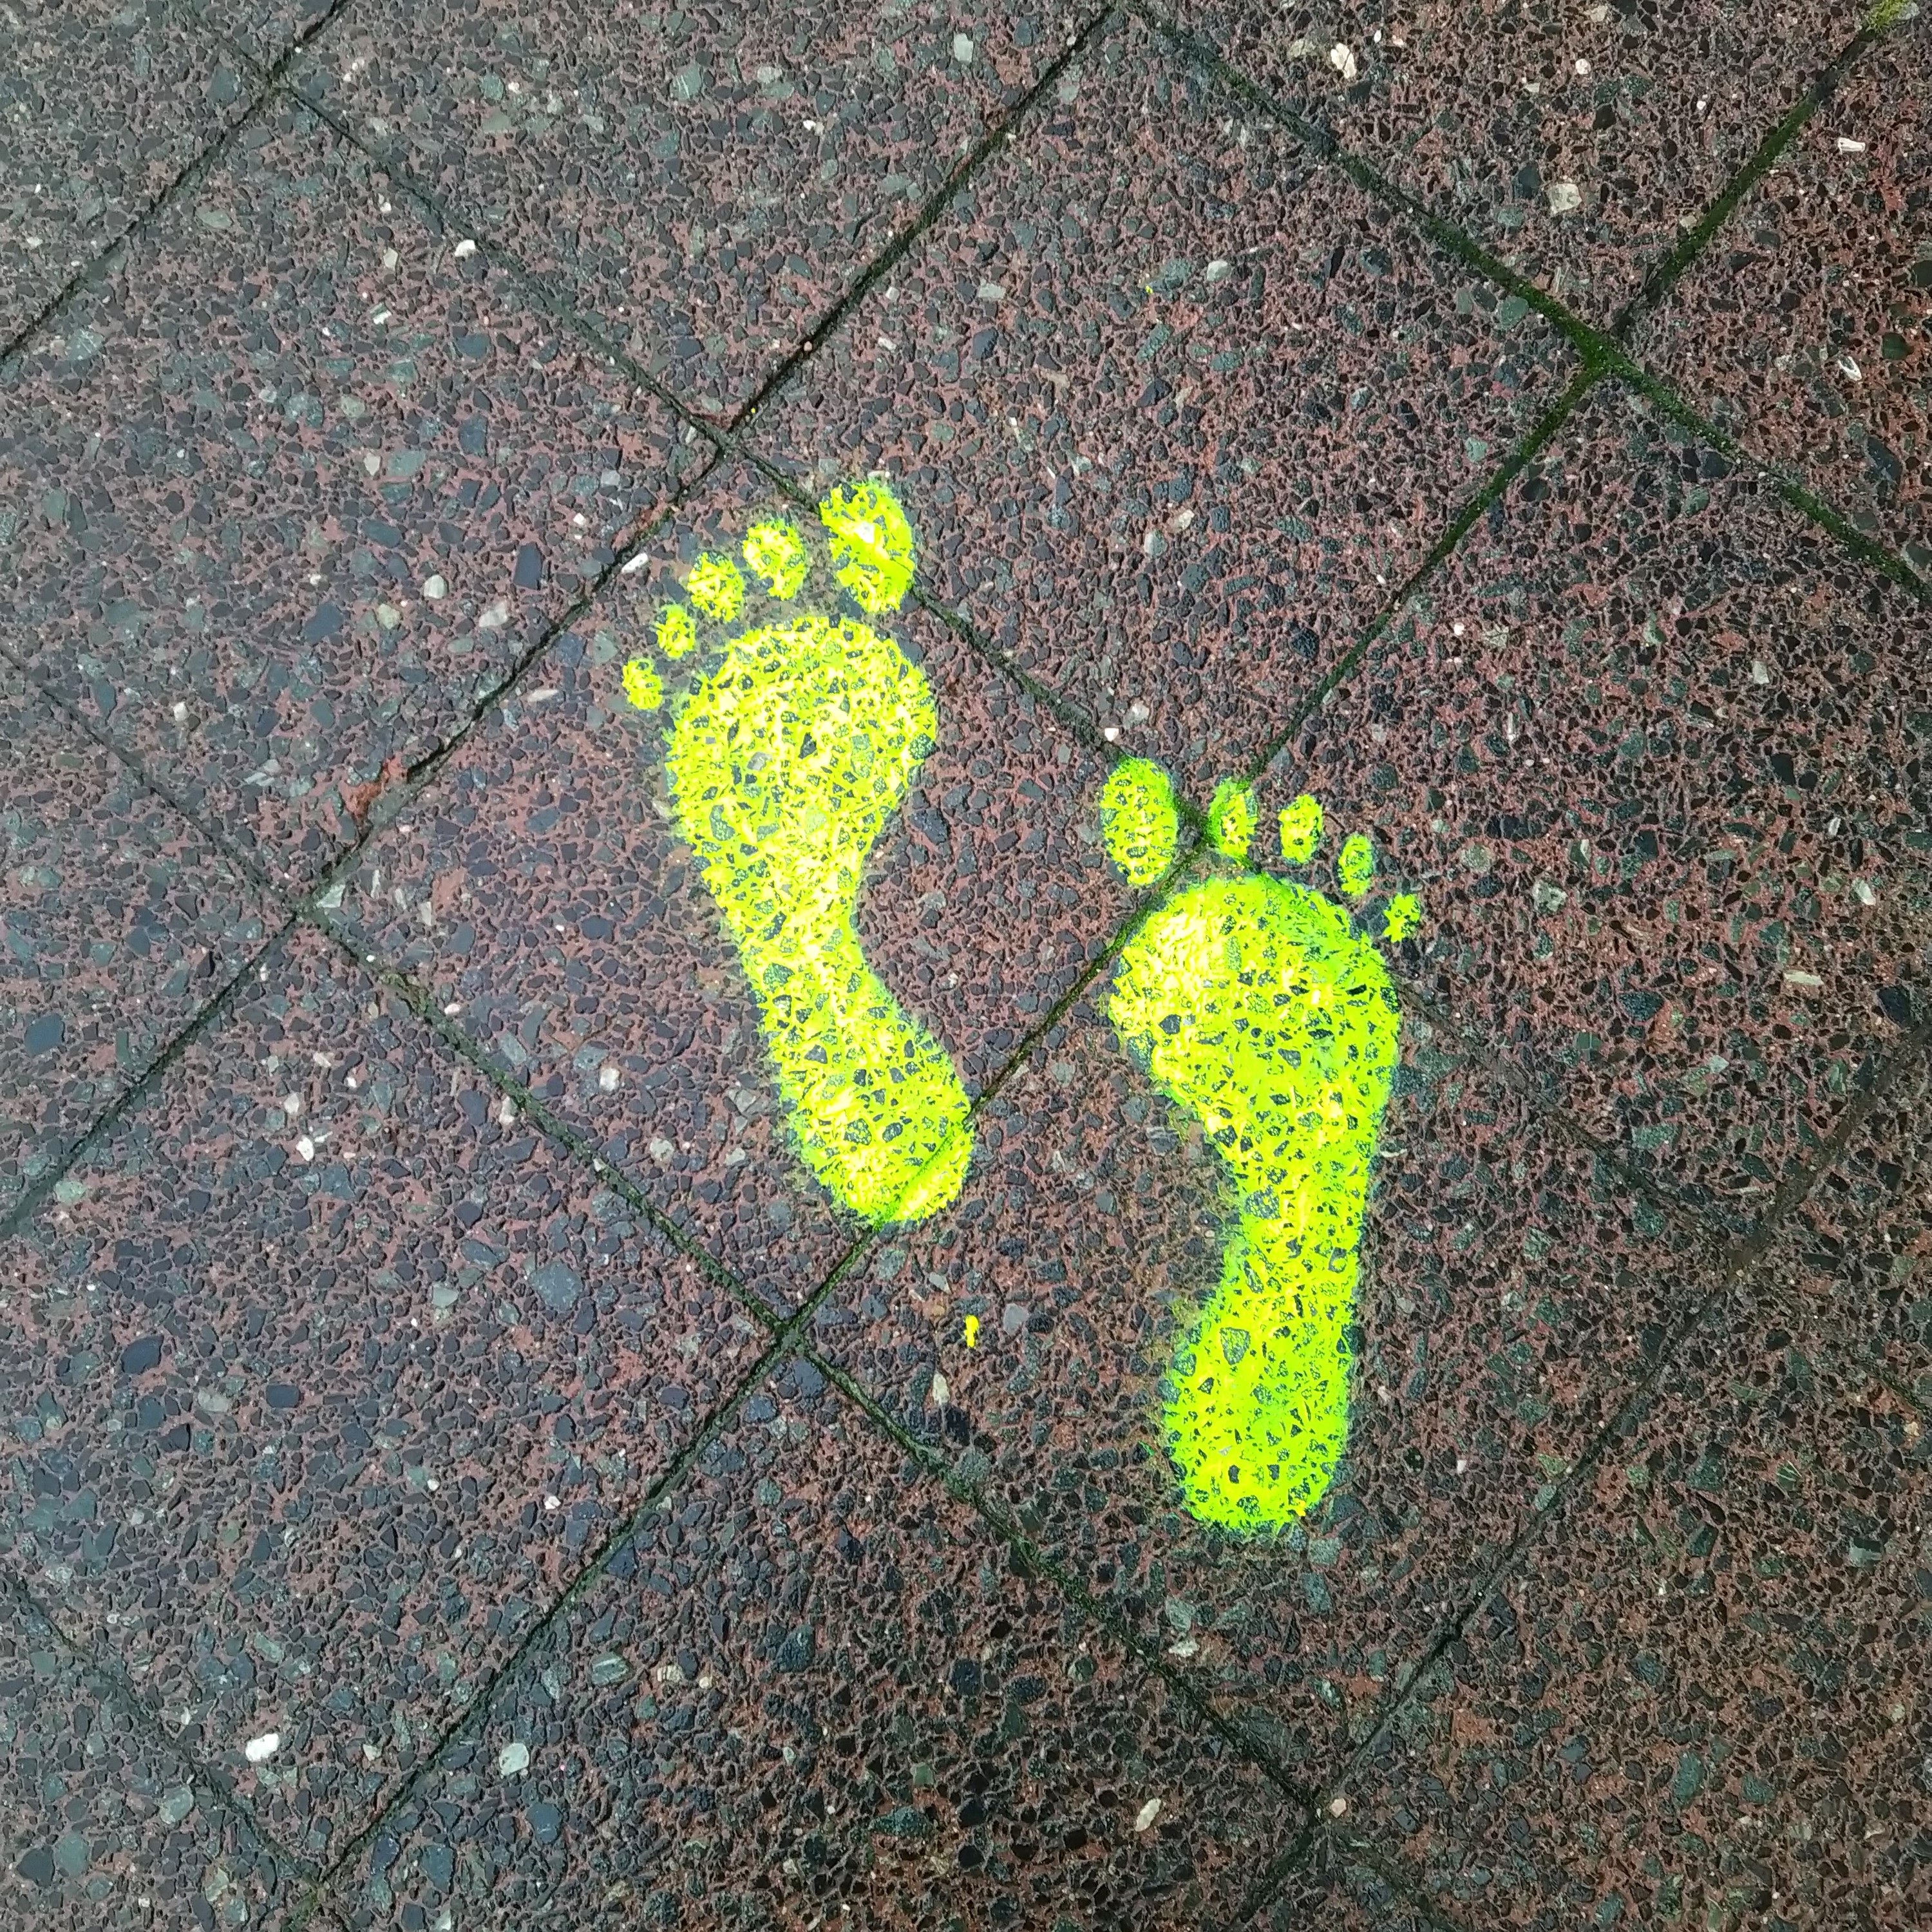 Glowing neon yellow footprints on the asphalt.